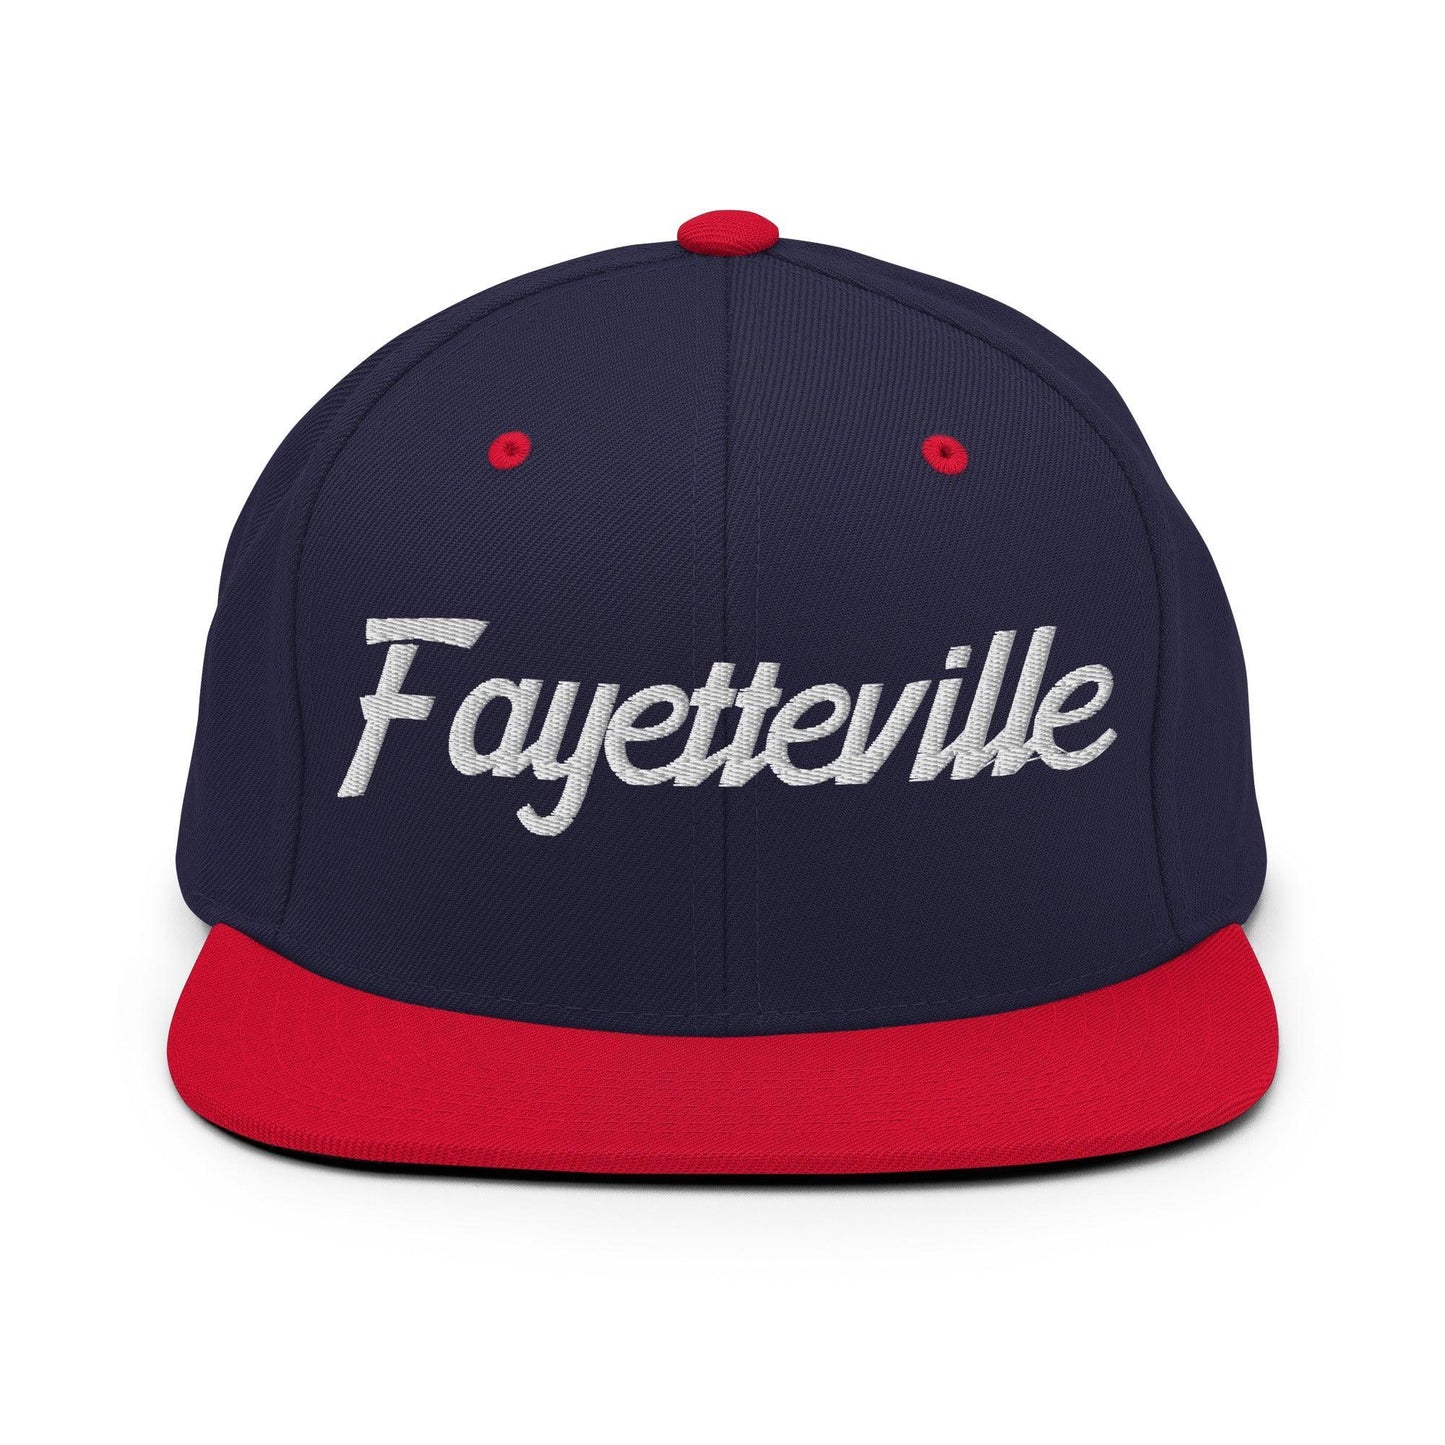 Fayetteville Script Snapback Hat Navy Red